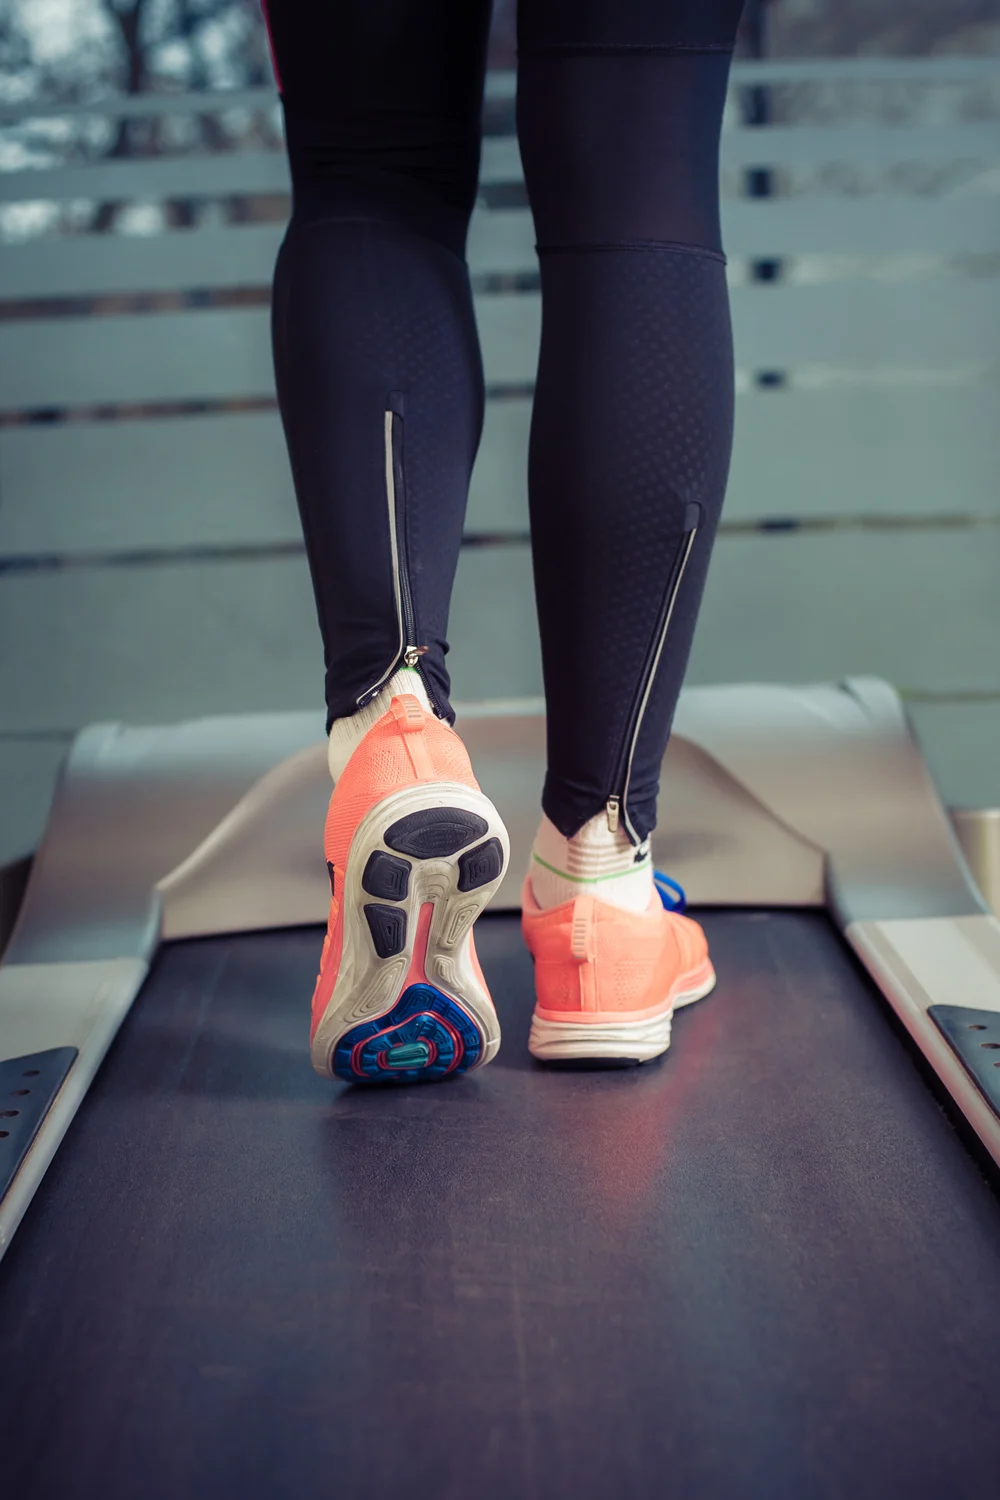 treadmill walking 6 miles a day